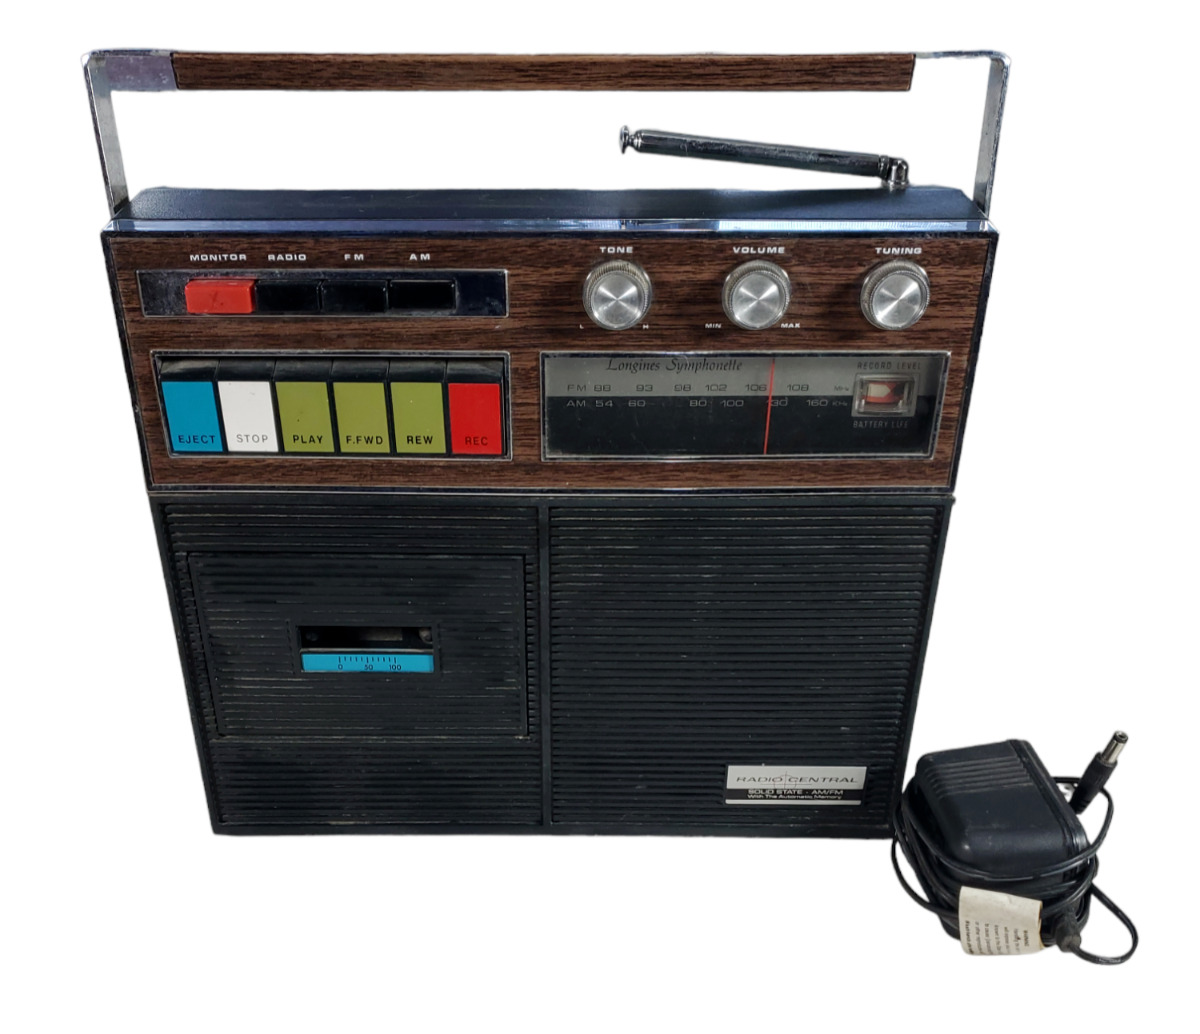 Longines Symphonette Radio Central Solid State AM/FM Cassette Player AC DC